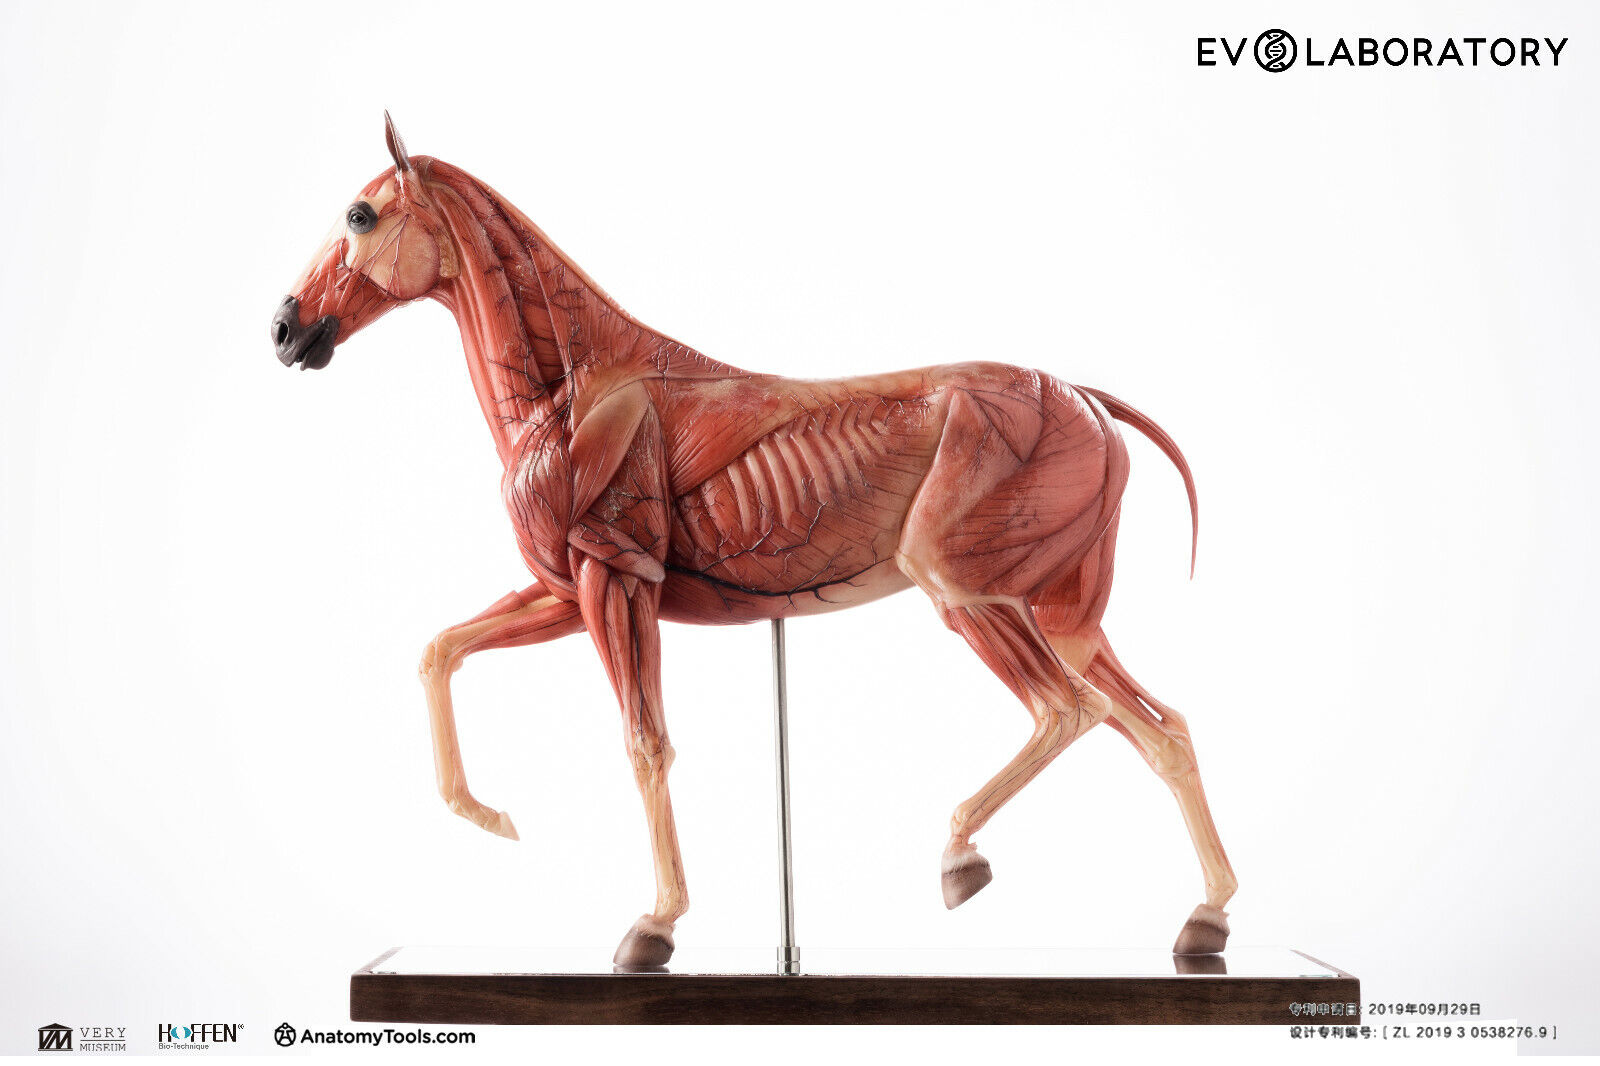 EVOLUTIO - 1/6 HORSE ANATOMY PU Medical full color statue - 19.3 x 3.5 x 12.6 in